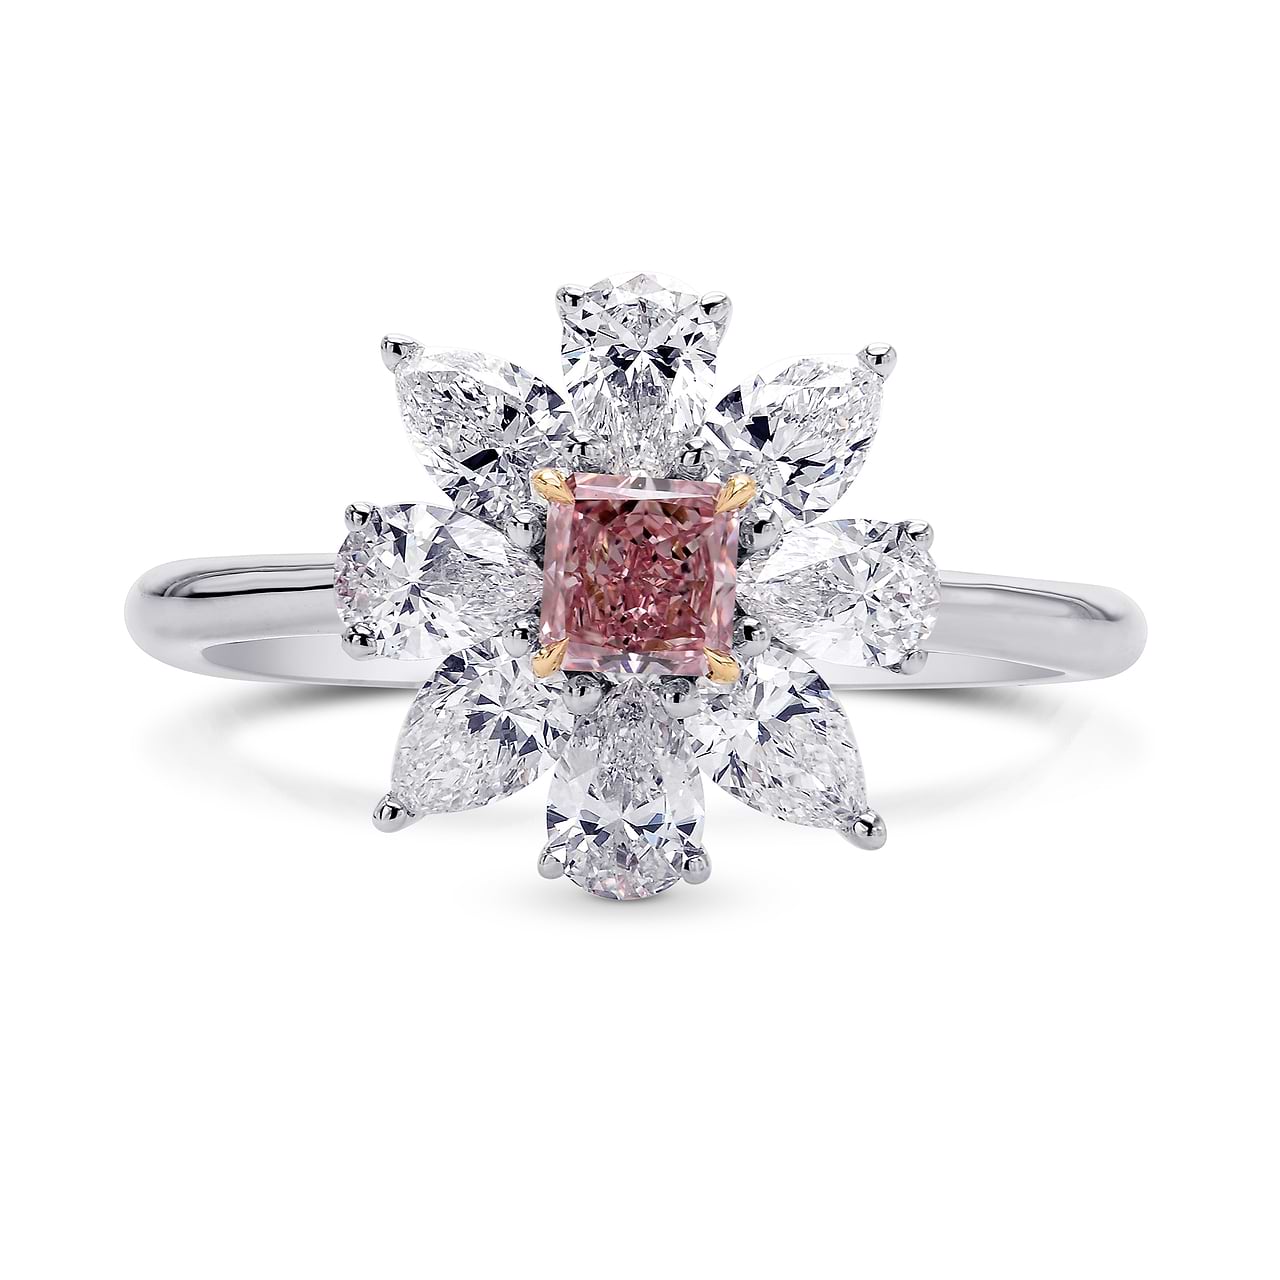 Fancy Intense Pink Radiant Diamond Ring, SKU 219158 (1.28Ct TW)